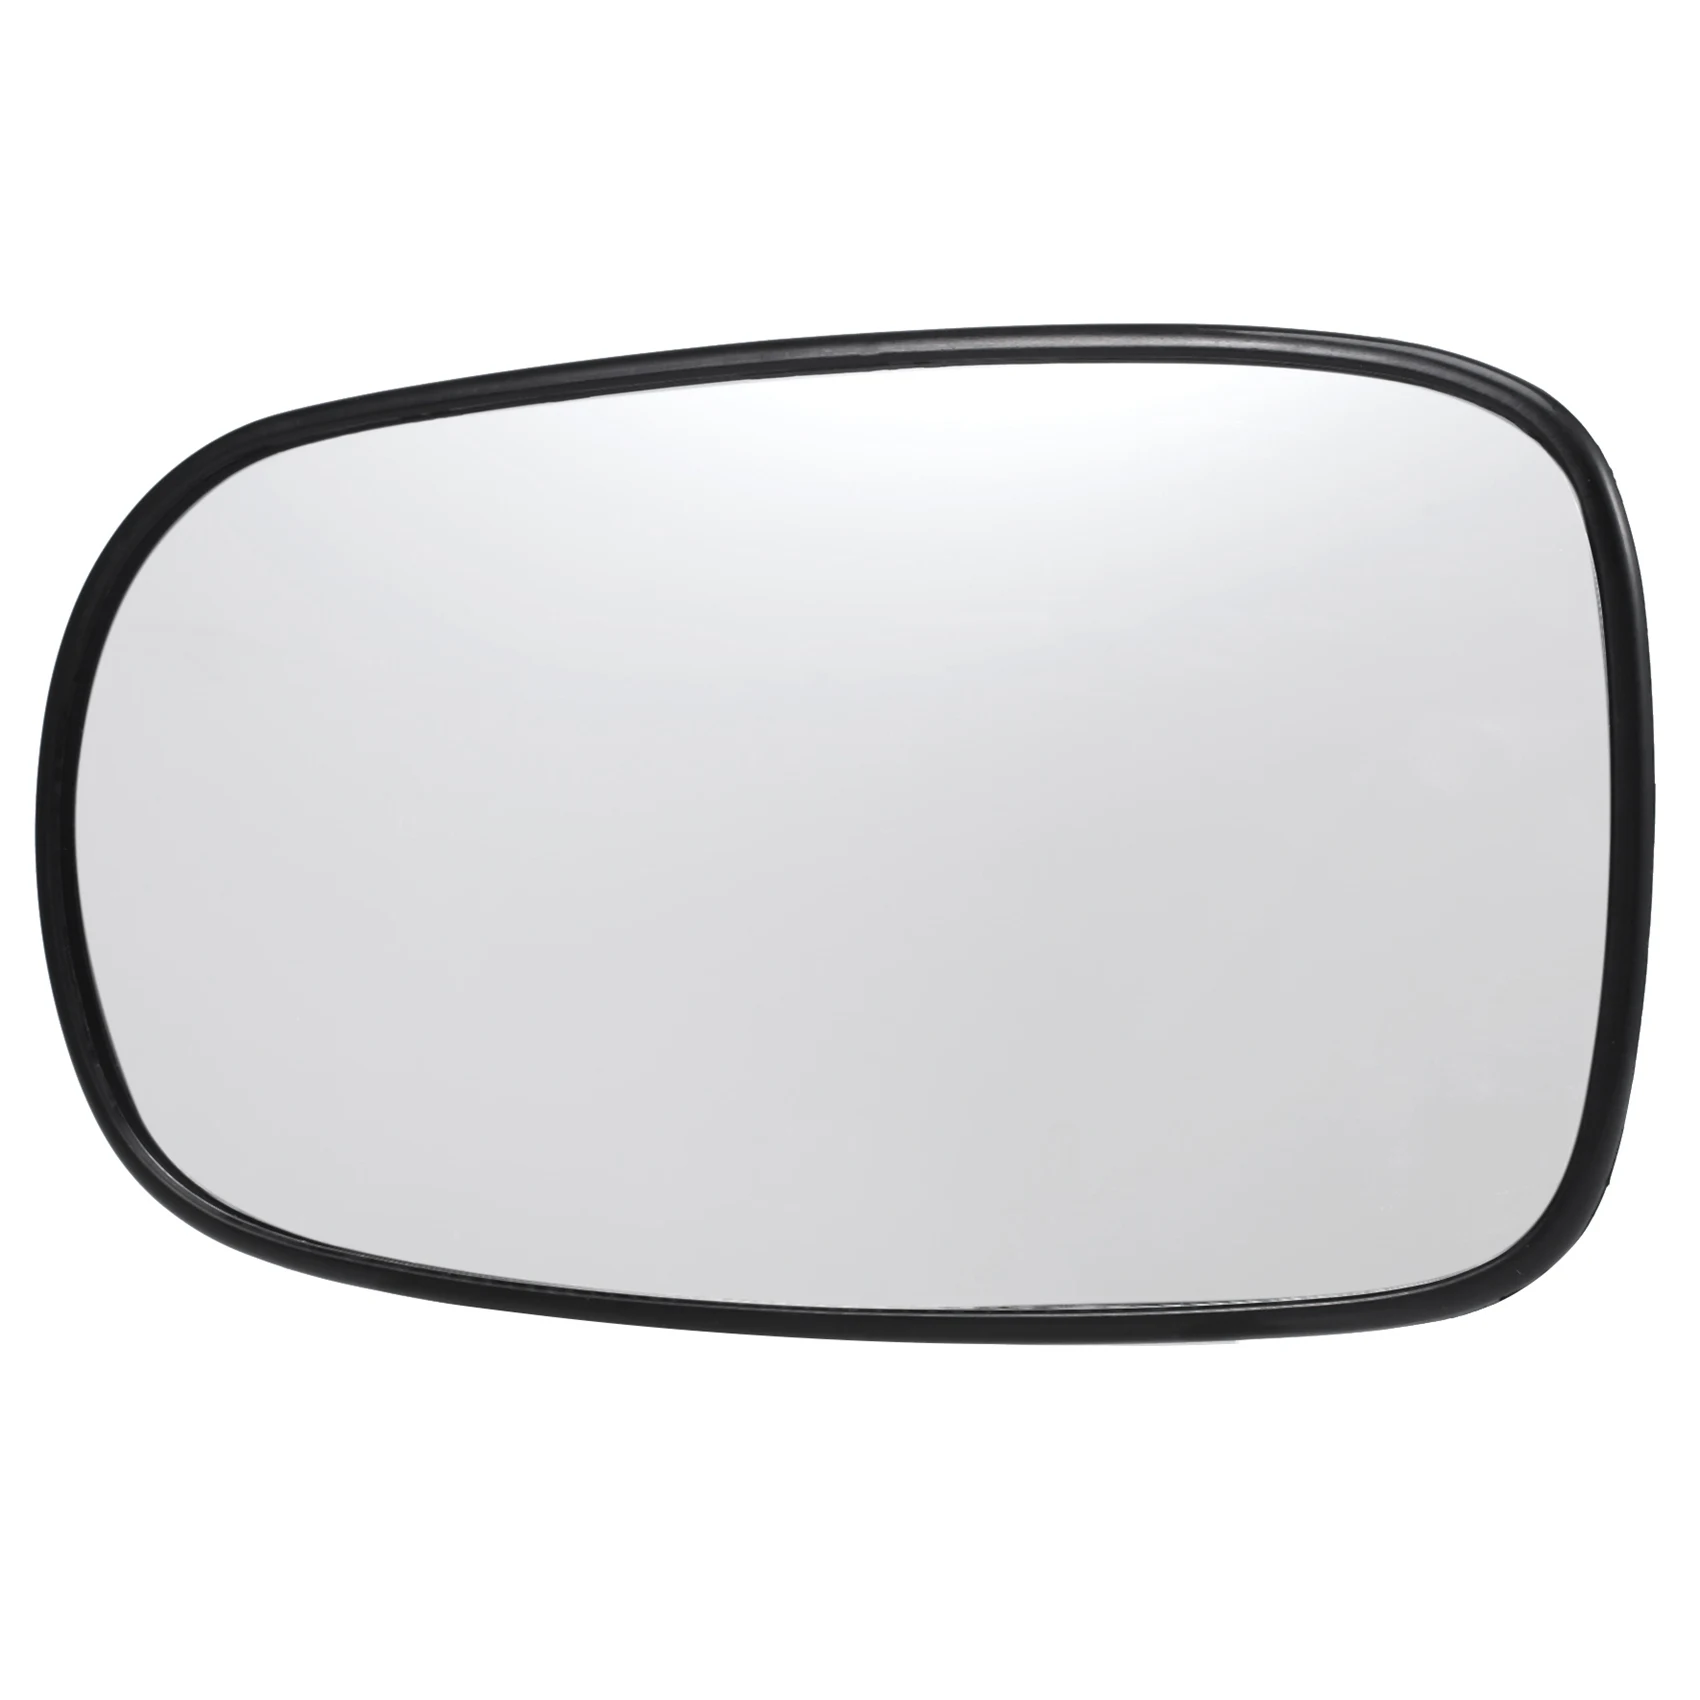 Стекло правого бокового зеркала заднего вида автомобиля Hyundai Azera 2006-2010 876213L322